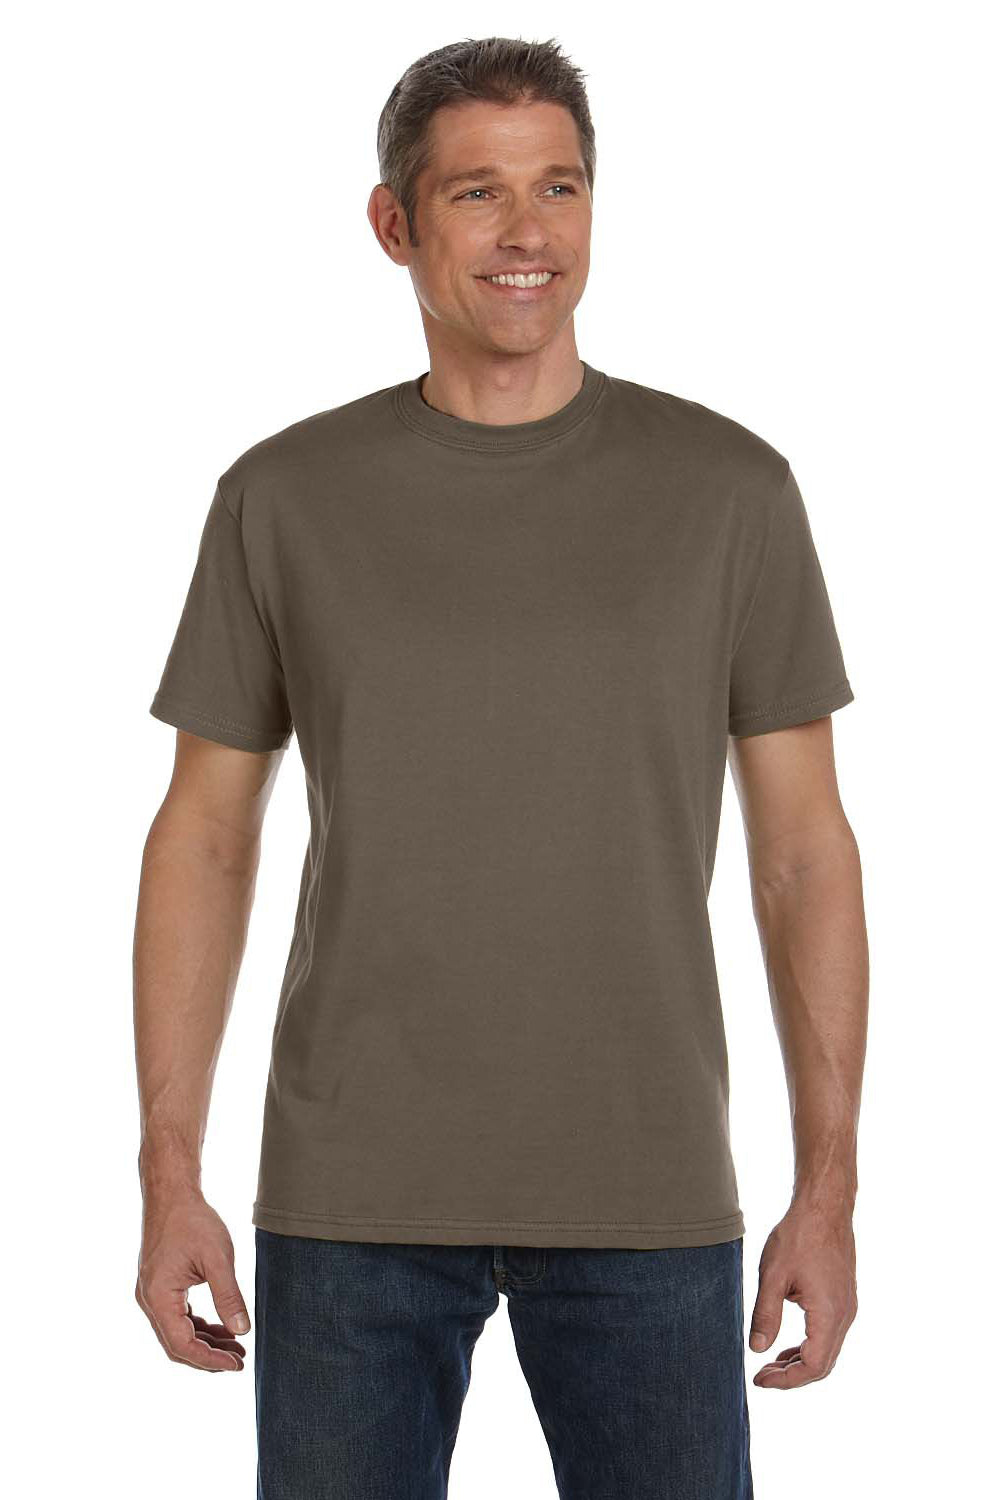 Econscious EC1000 Mens Short Sleeve Crewneck T-Shirt Meteorite Brown Front